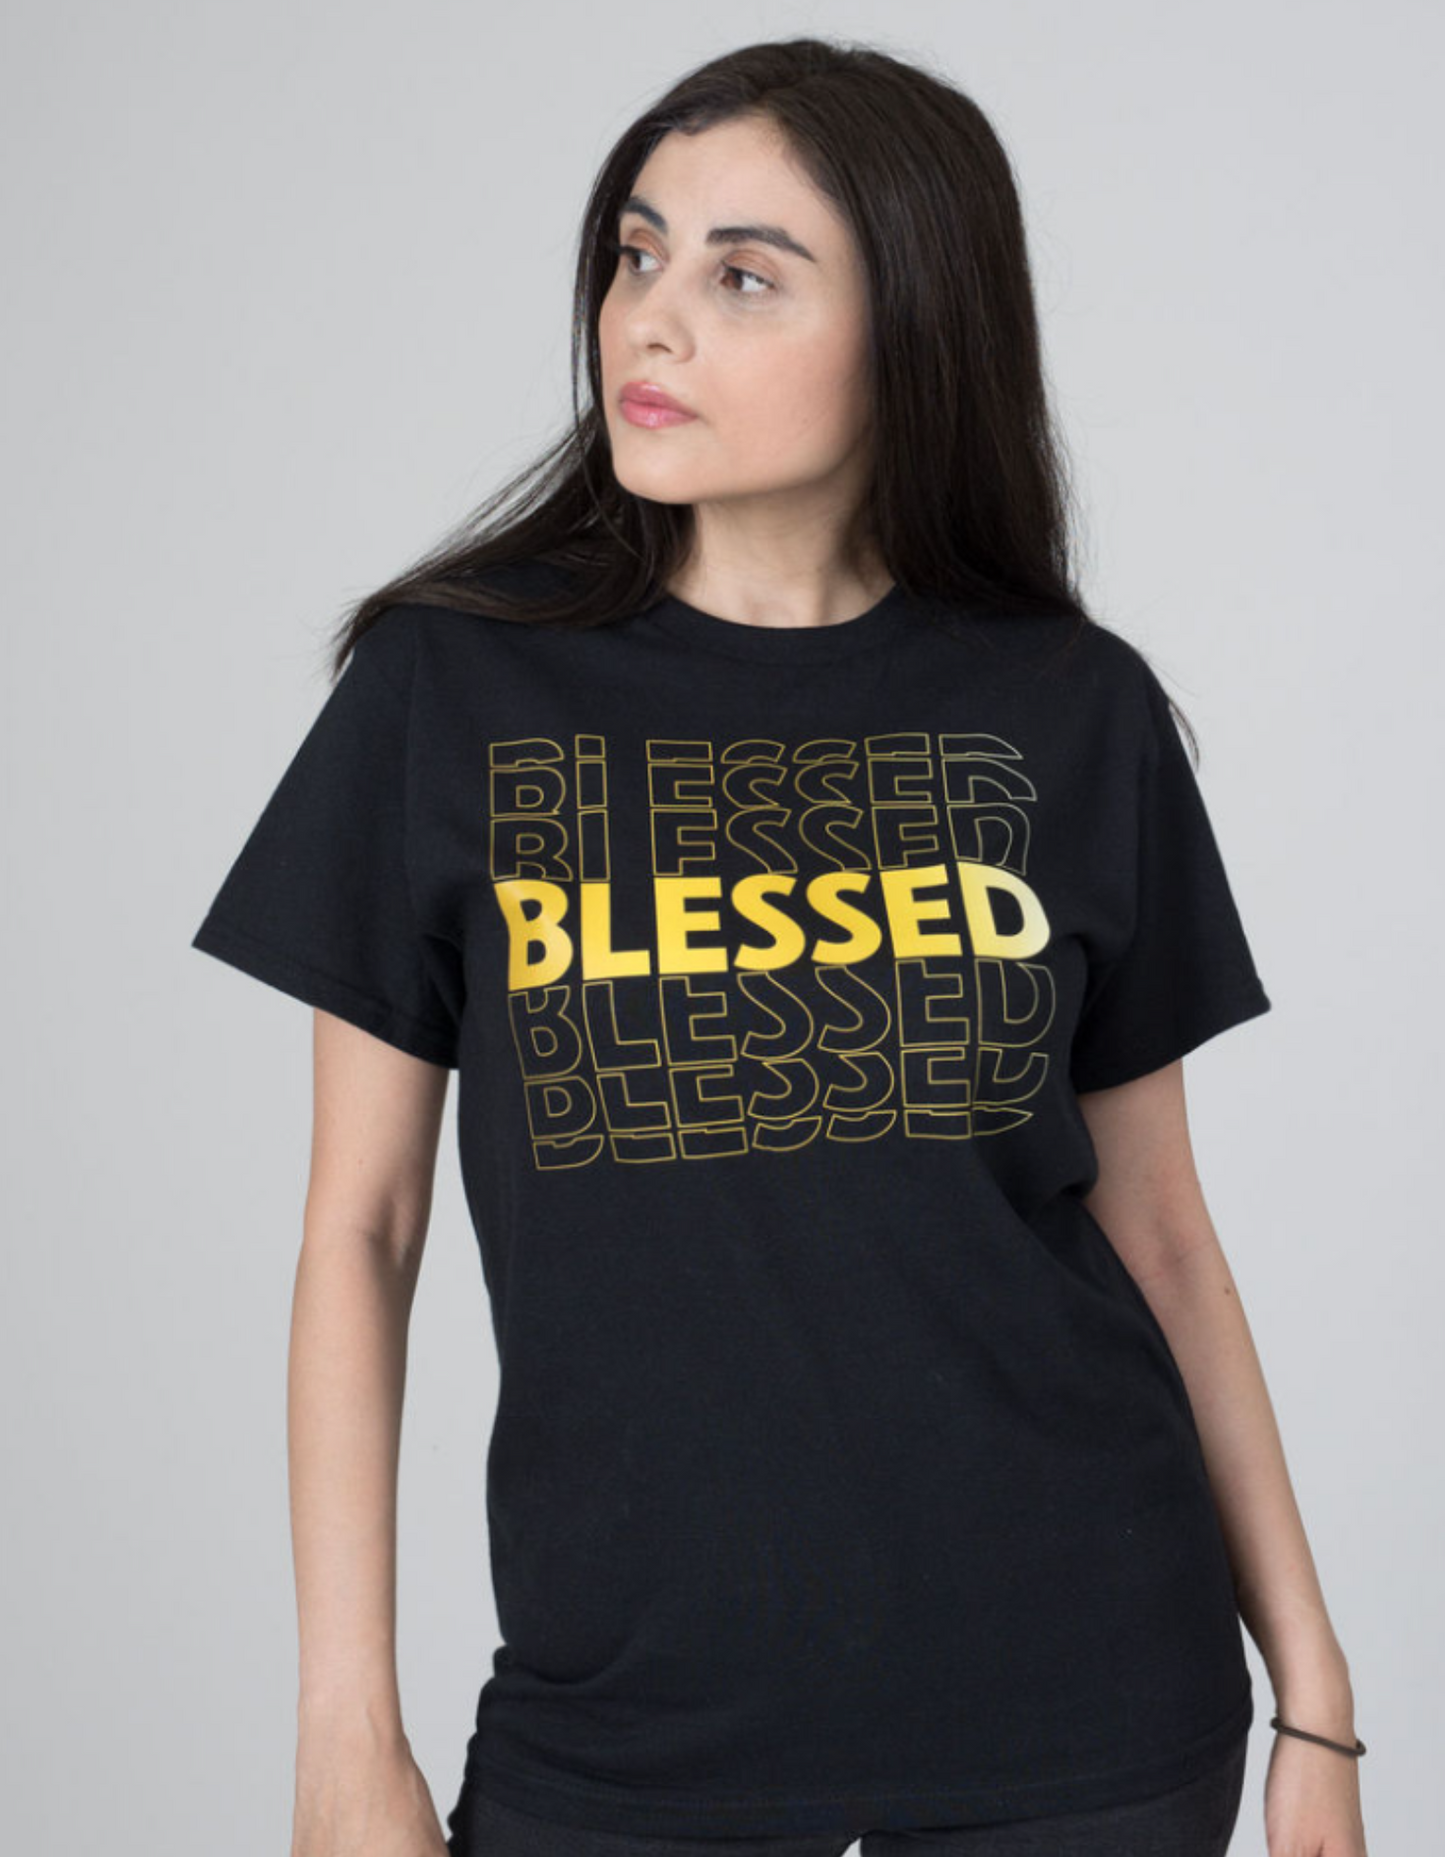 Blessed Beyond Measure Tshirt Rootedingreatness.com